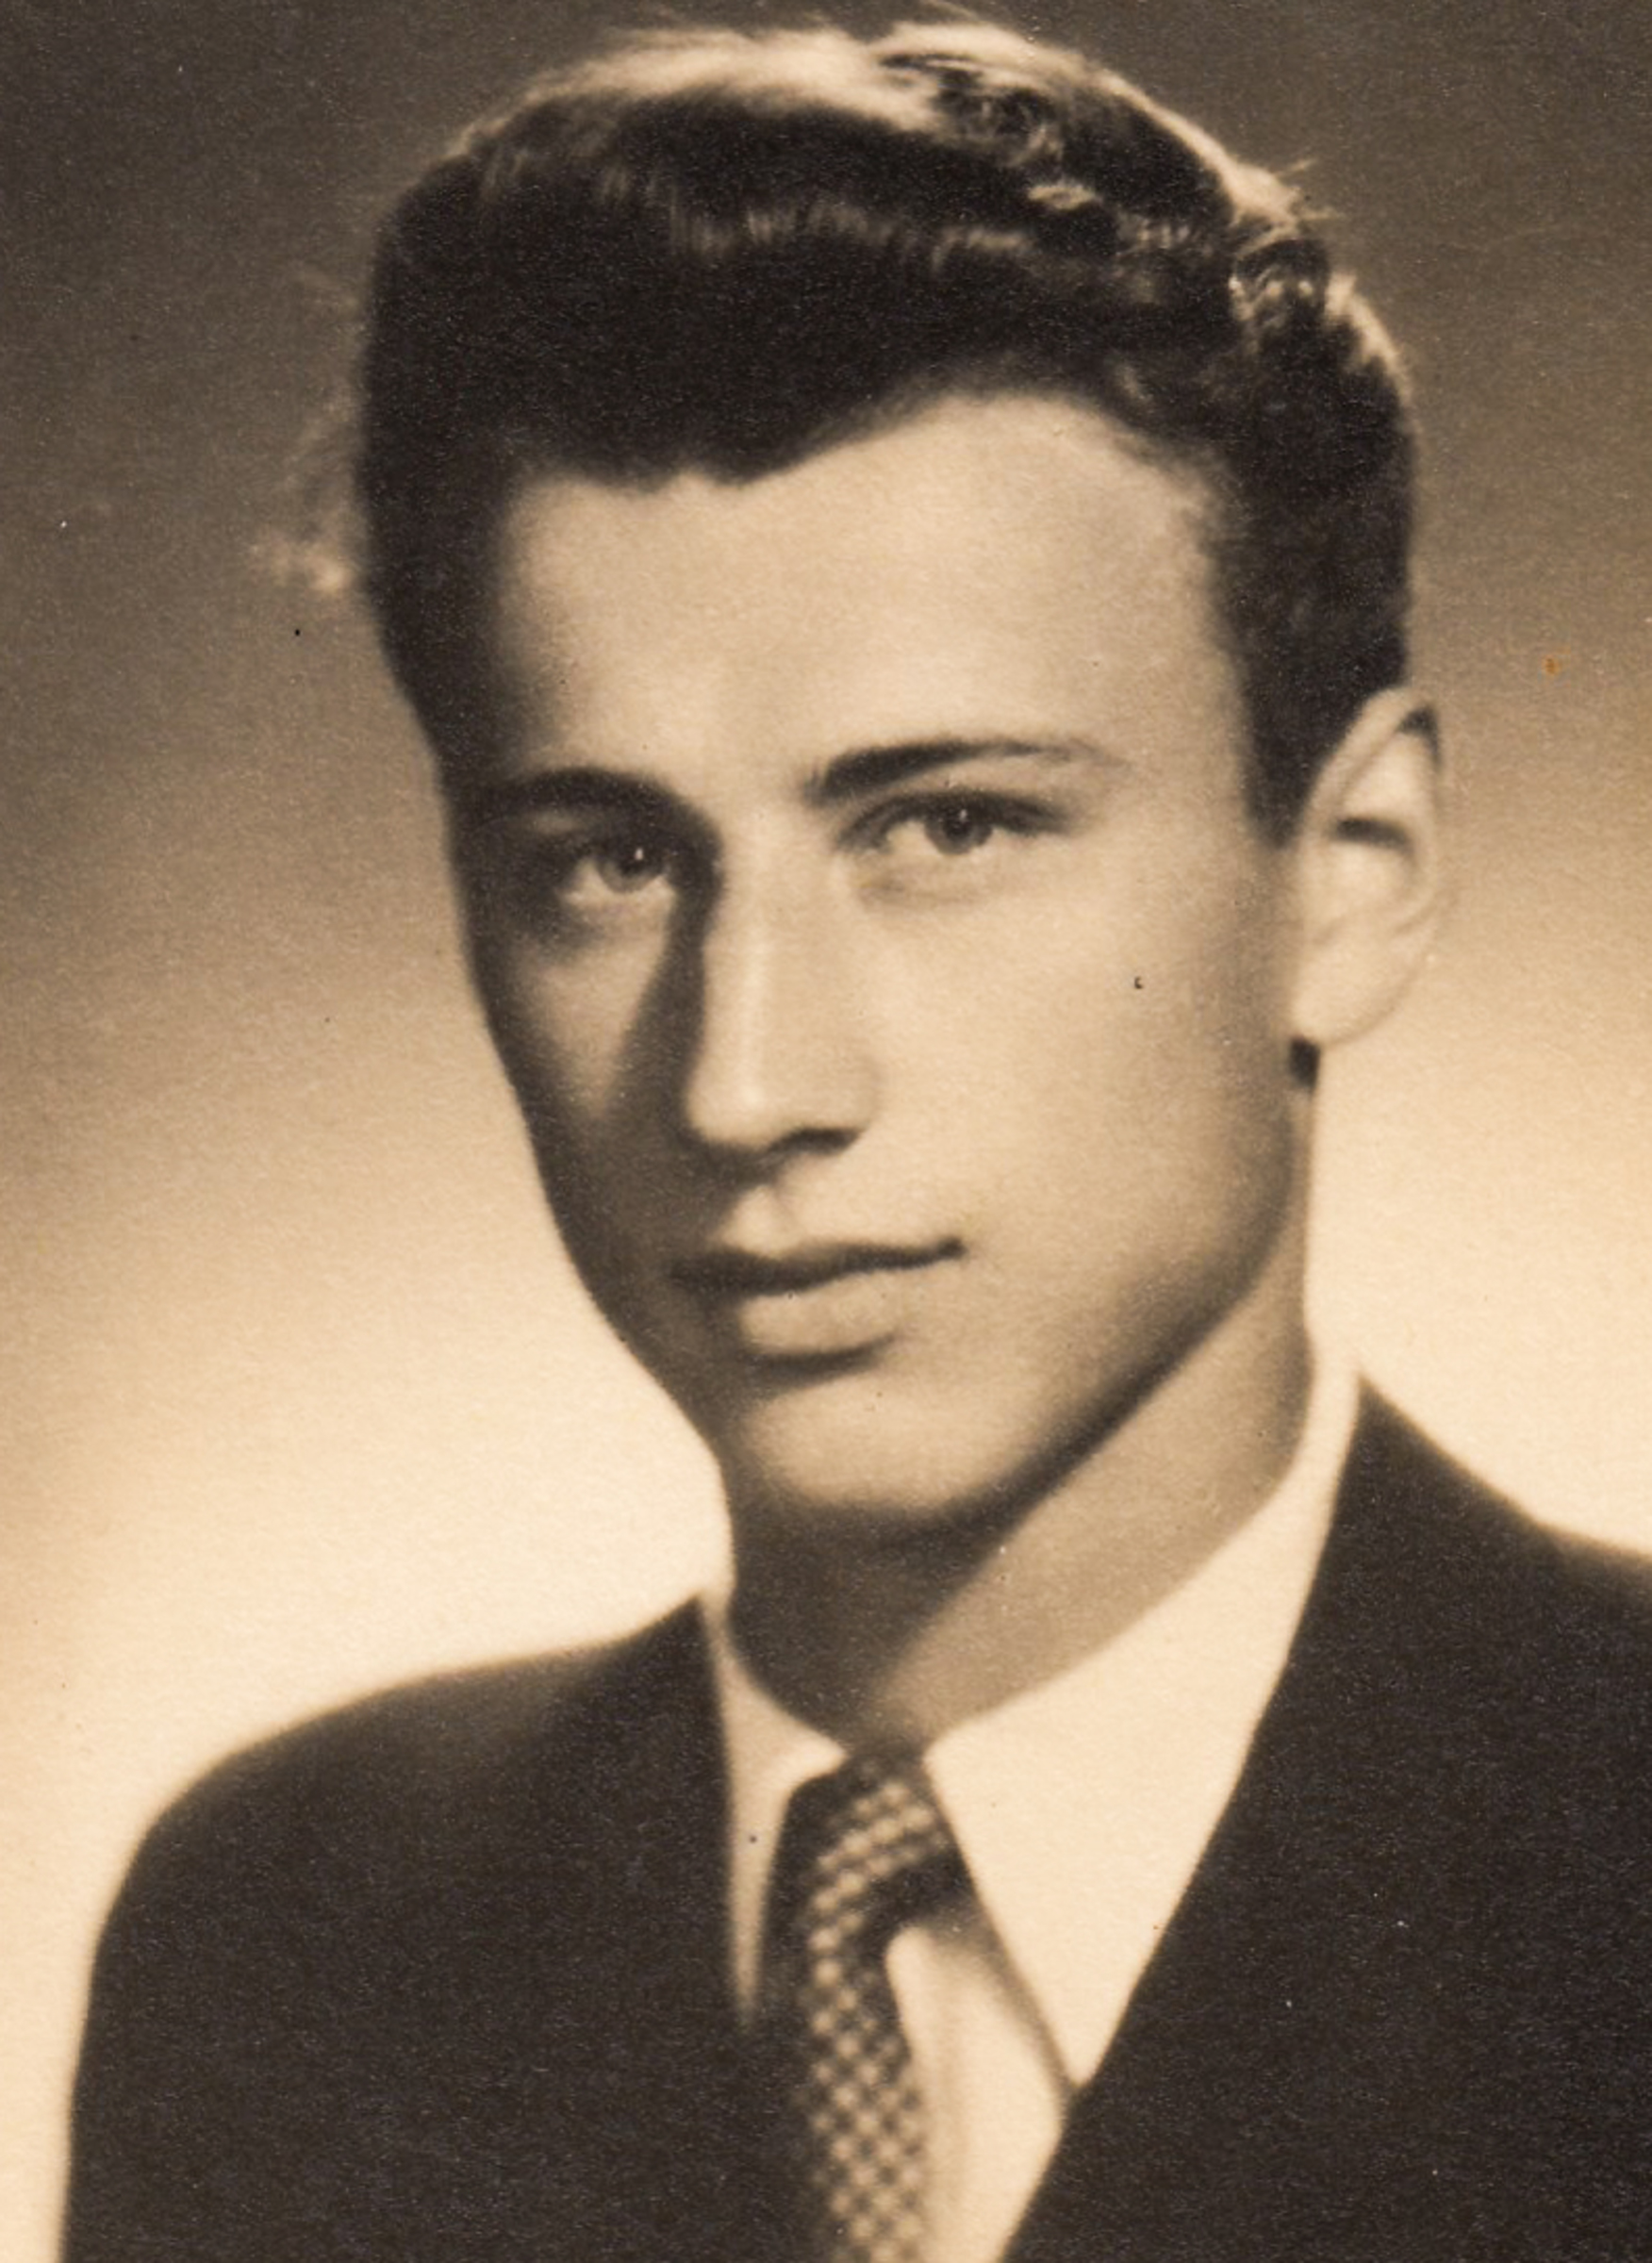 Josef Koutecky, 1948 (a graduation photo)